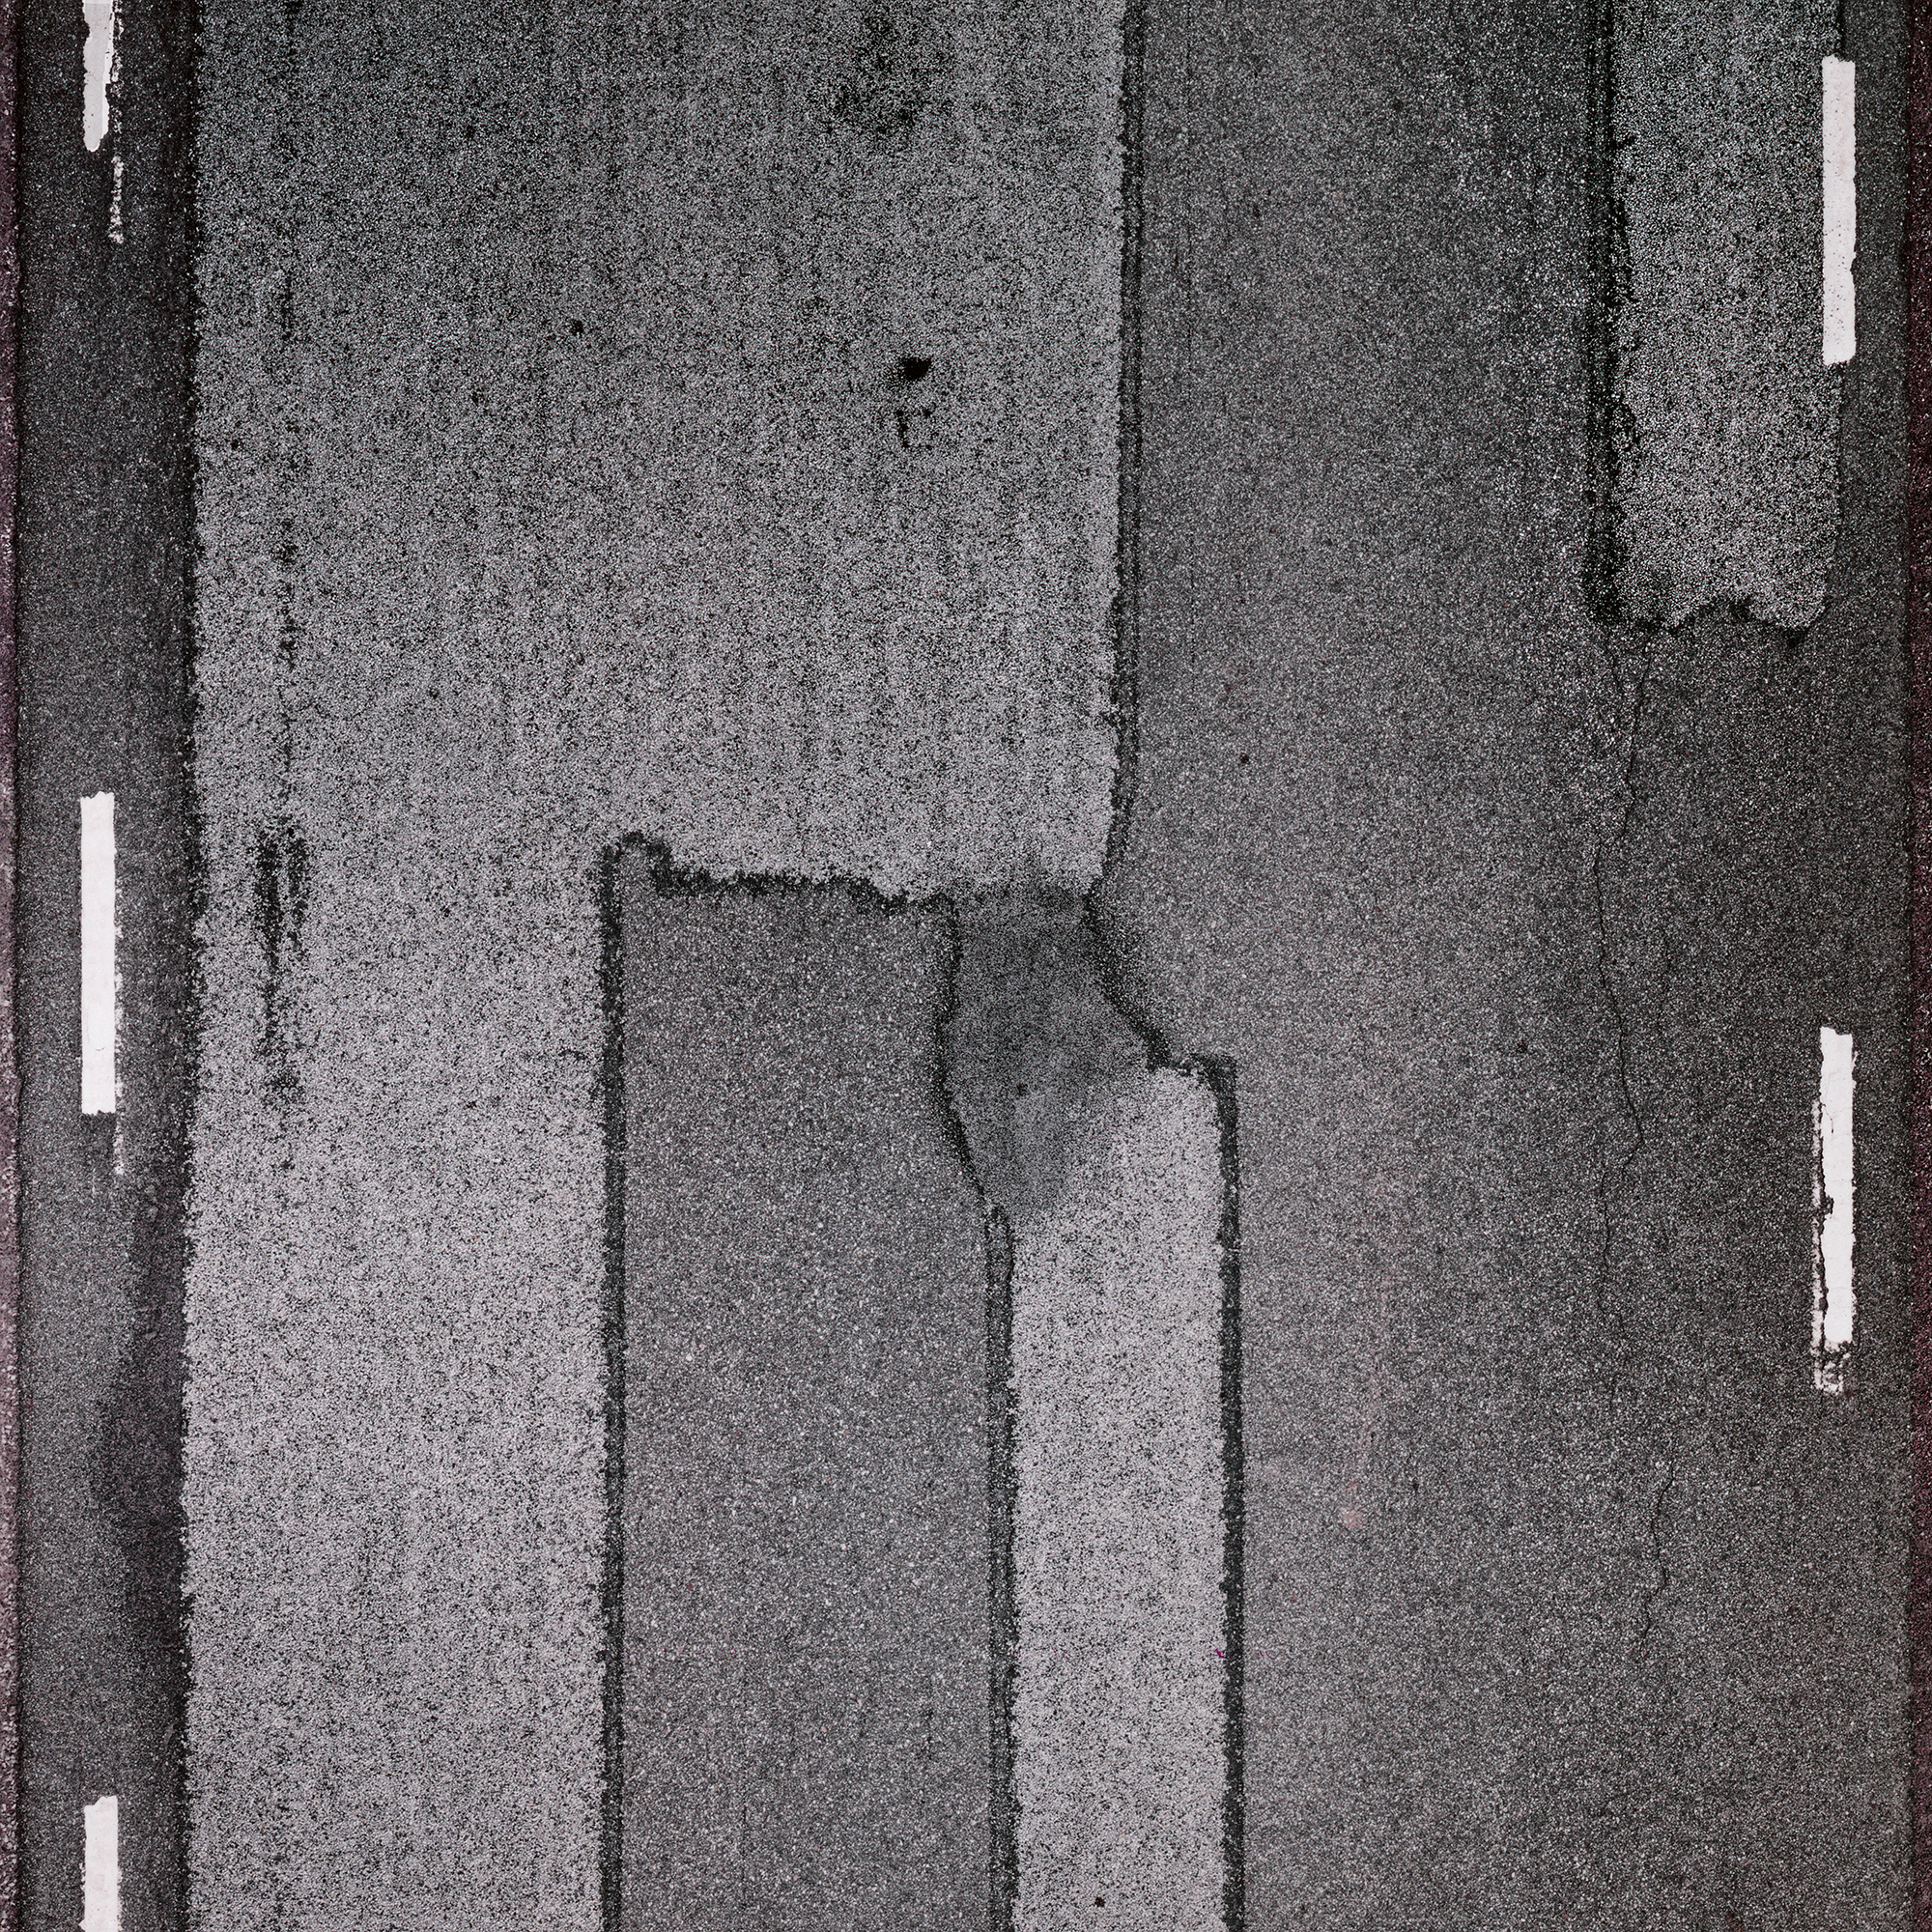 Clay Ketter, Road 1.b, 2000, Diasec-mounted C-print, 180 x 180 cm
